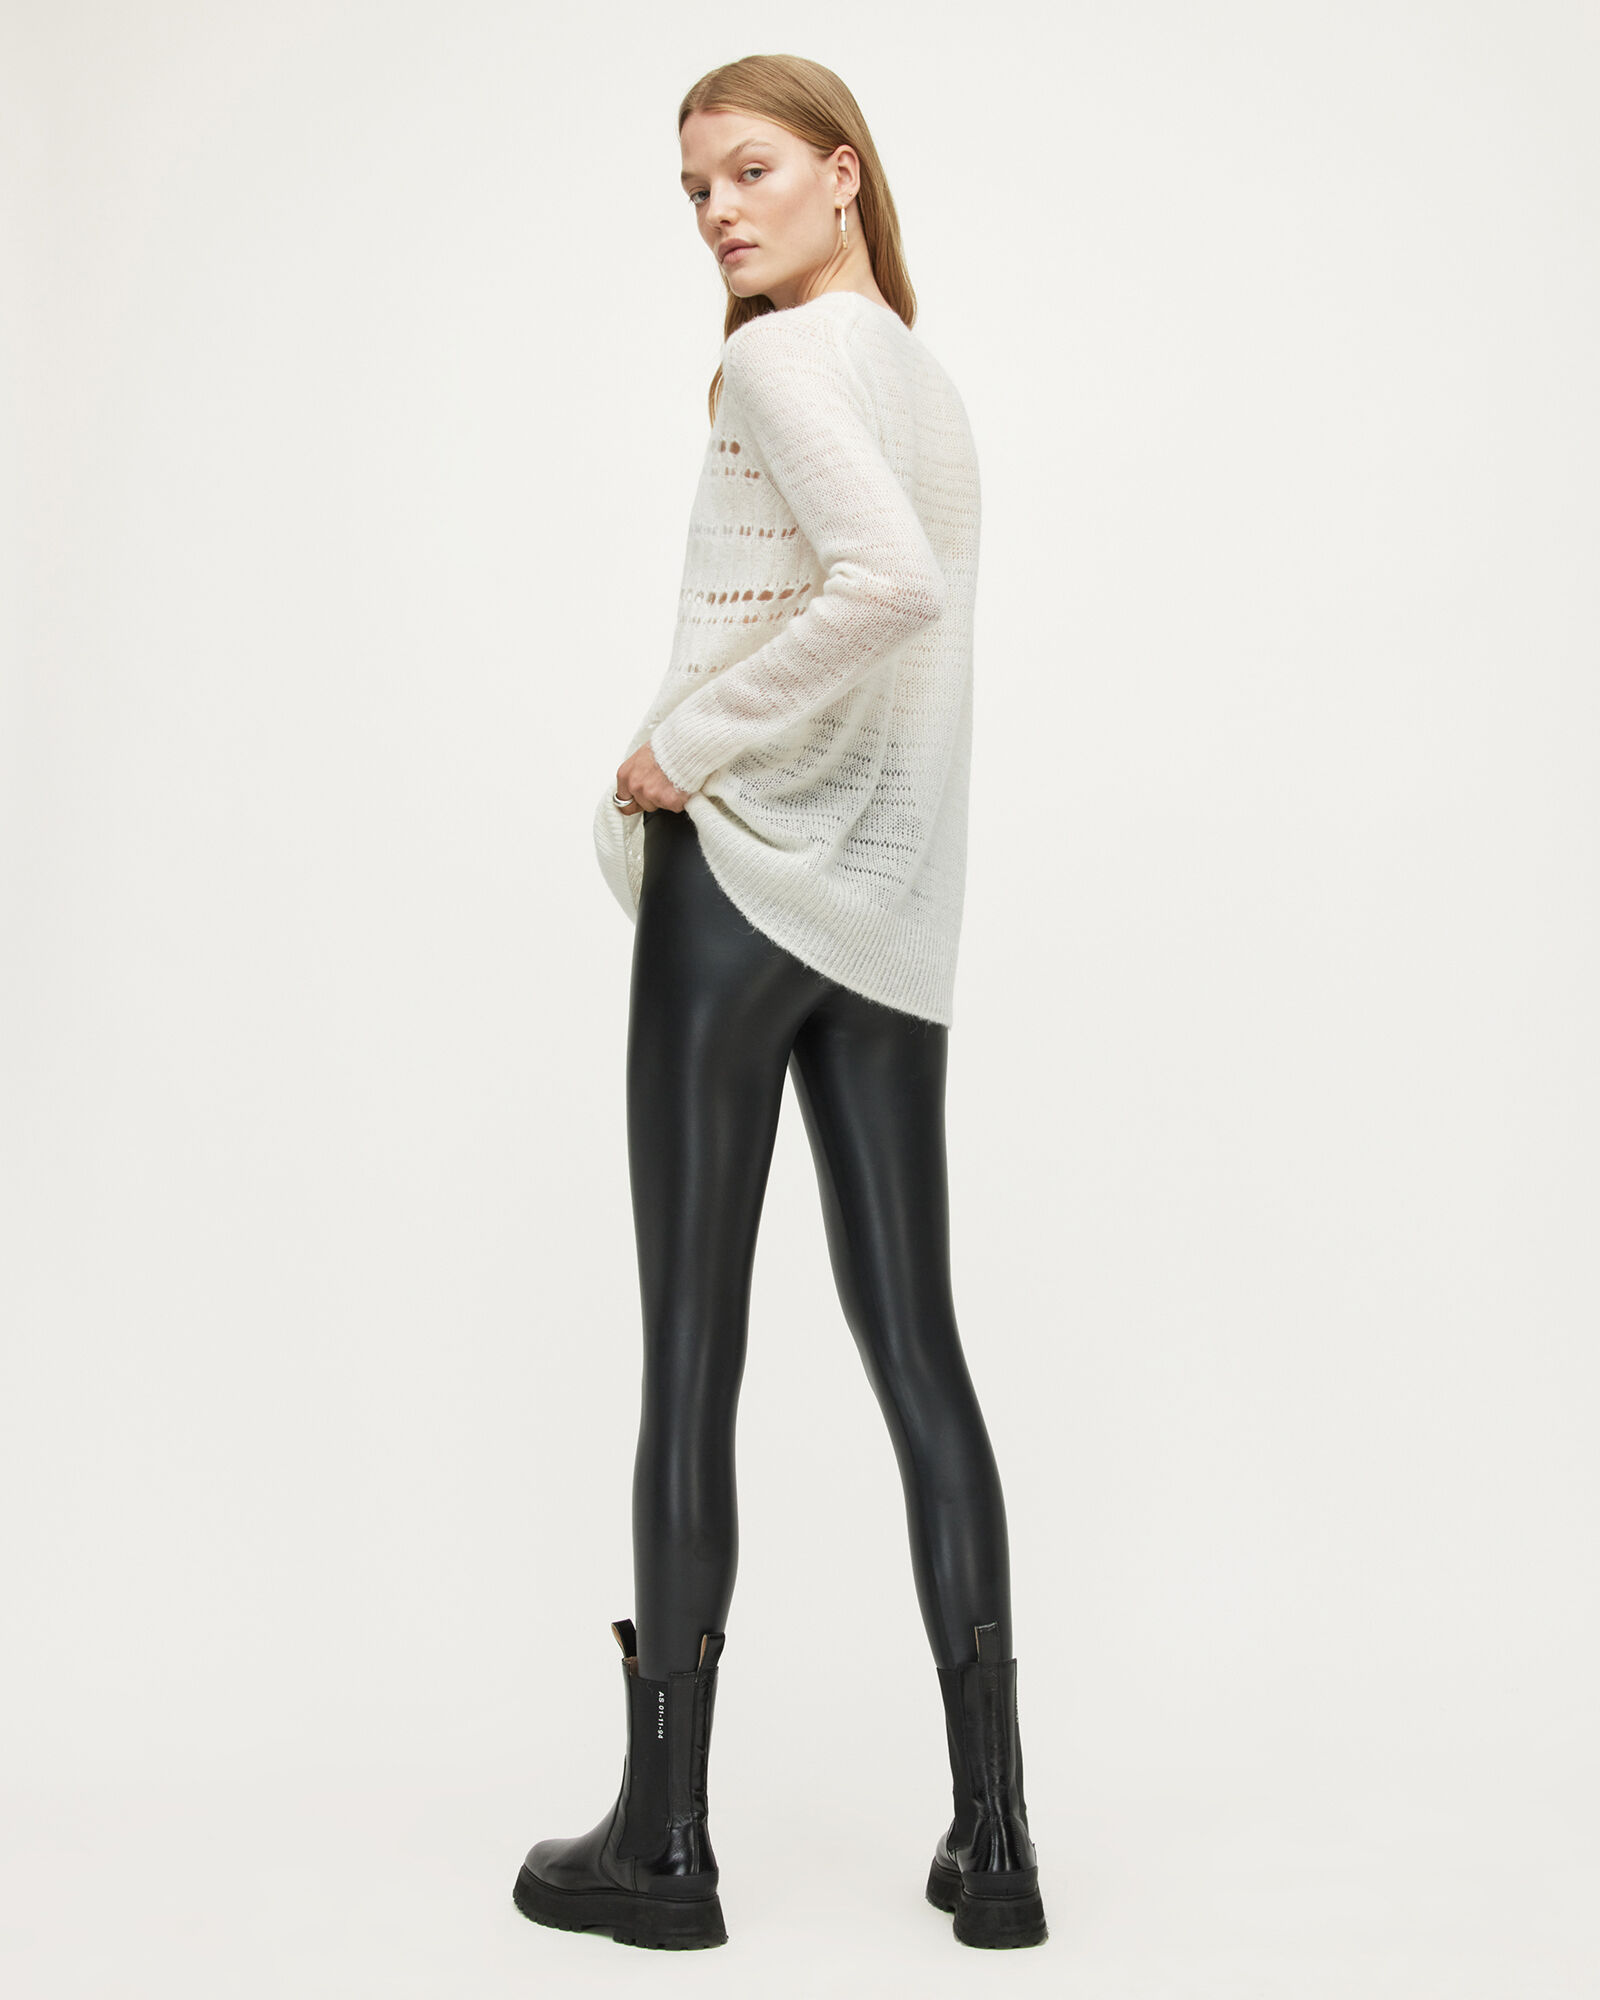 Cora Leather Look High-Rise Leggings